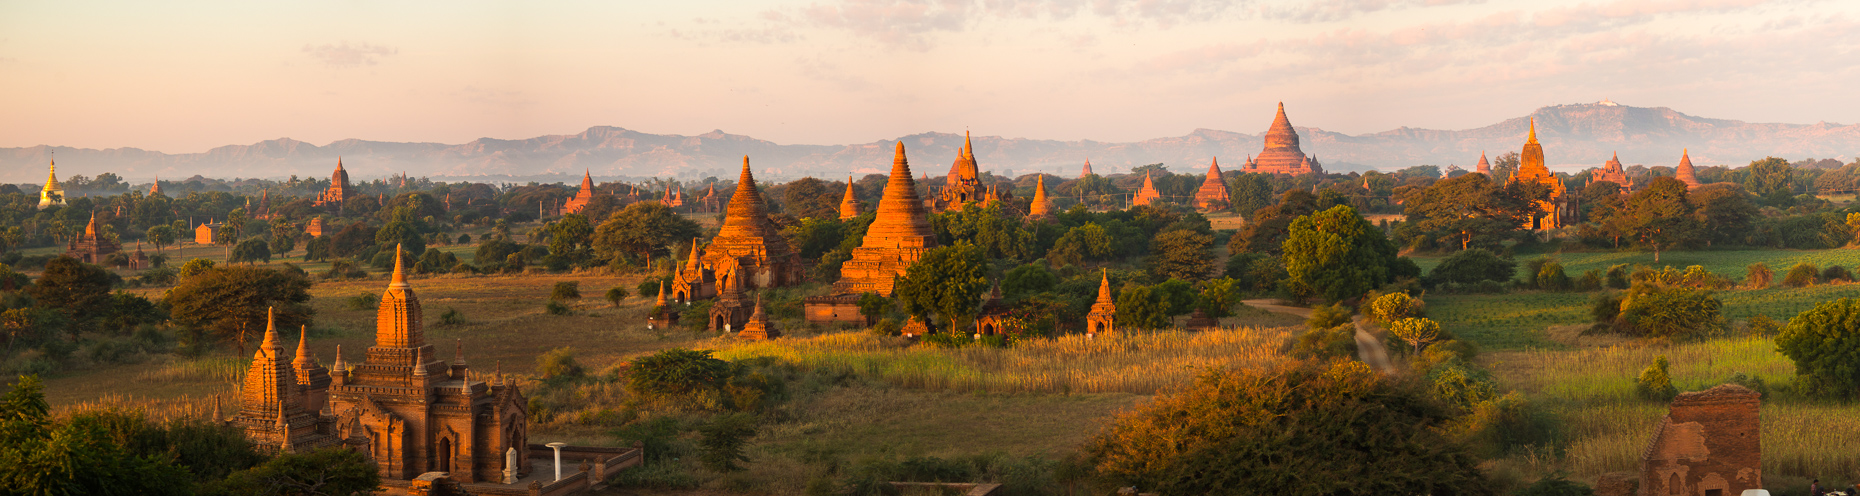 Temples in the Evening-Myanmar